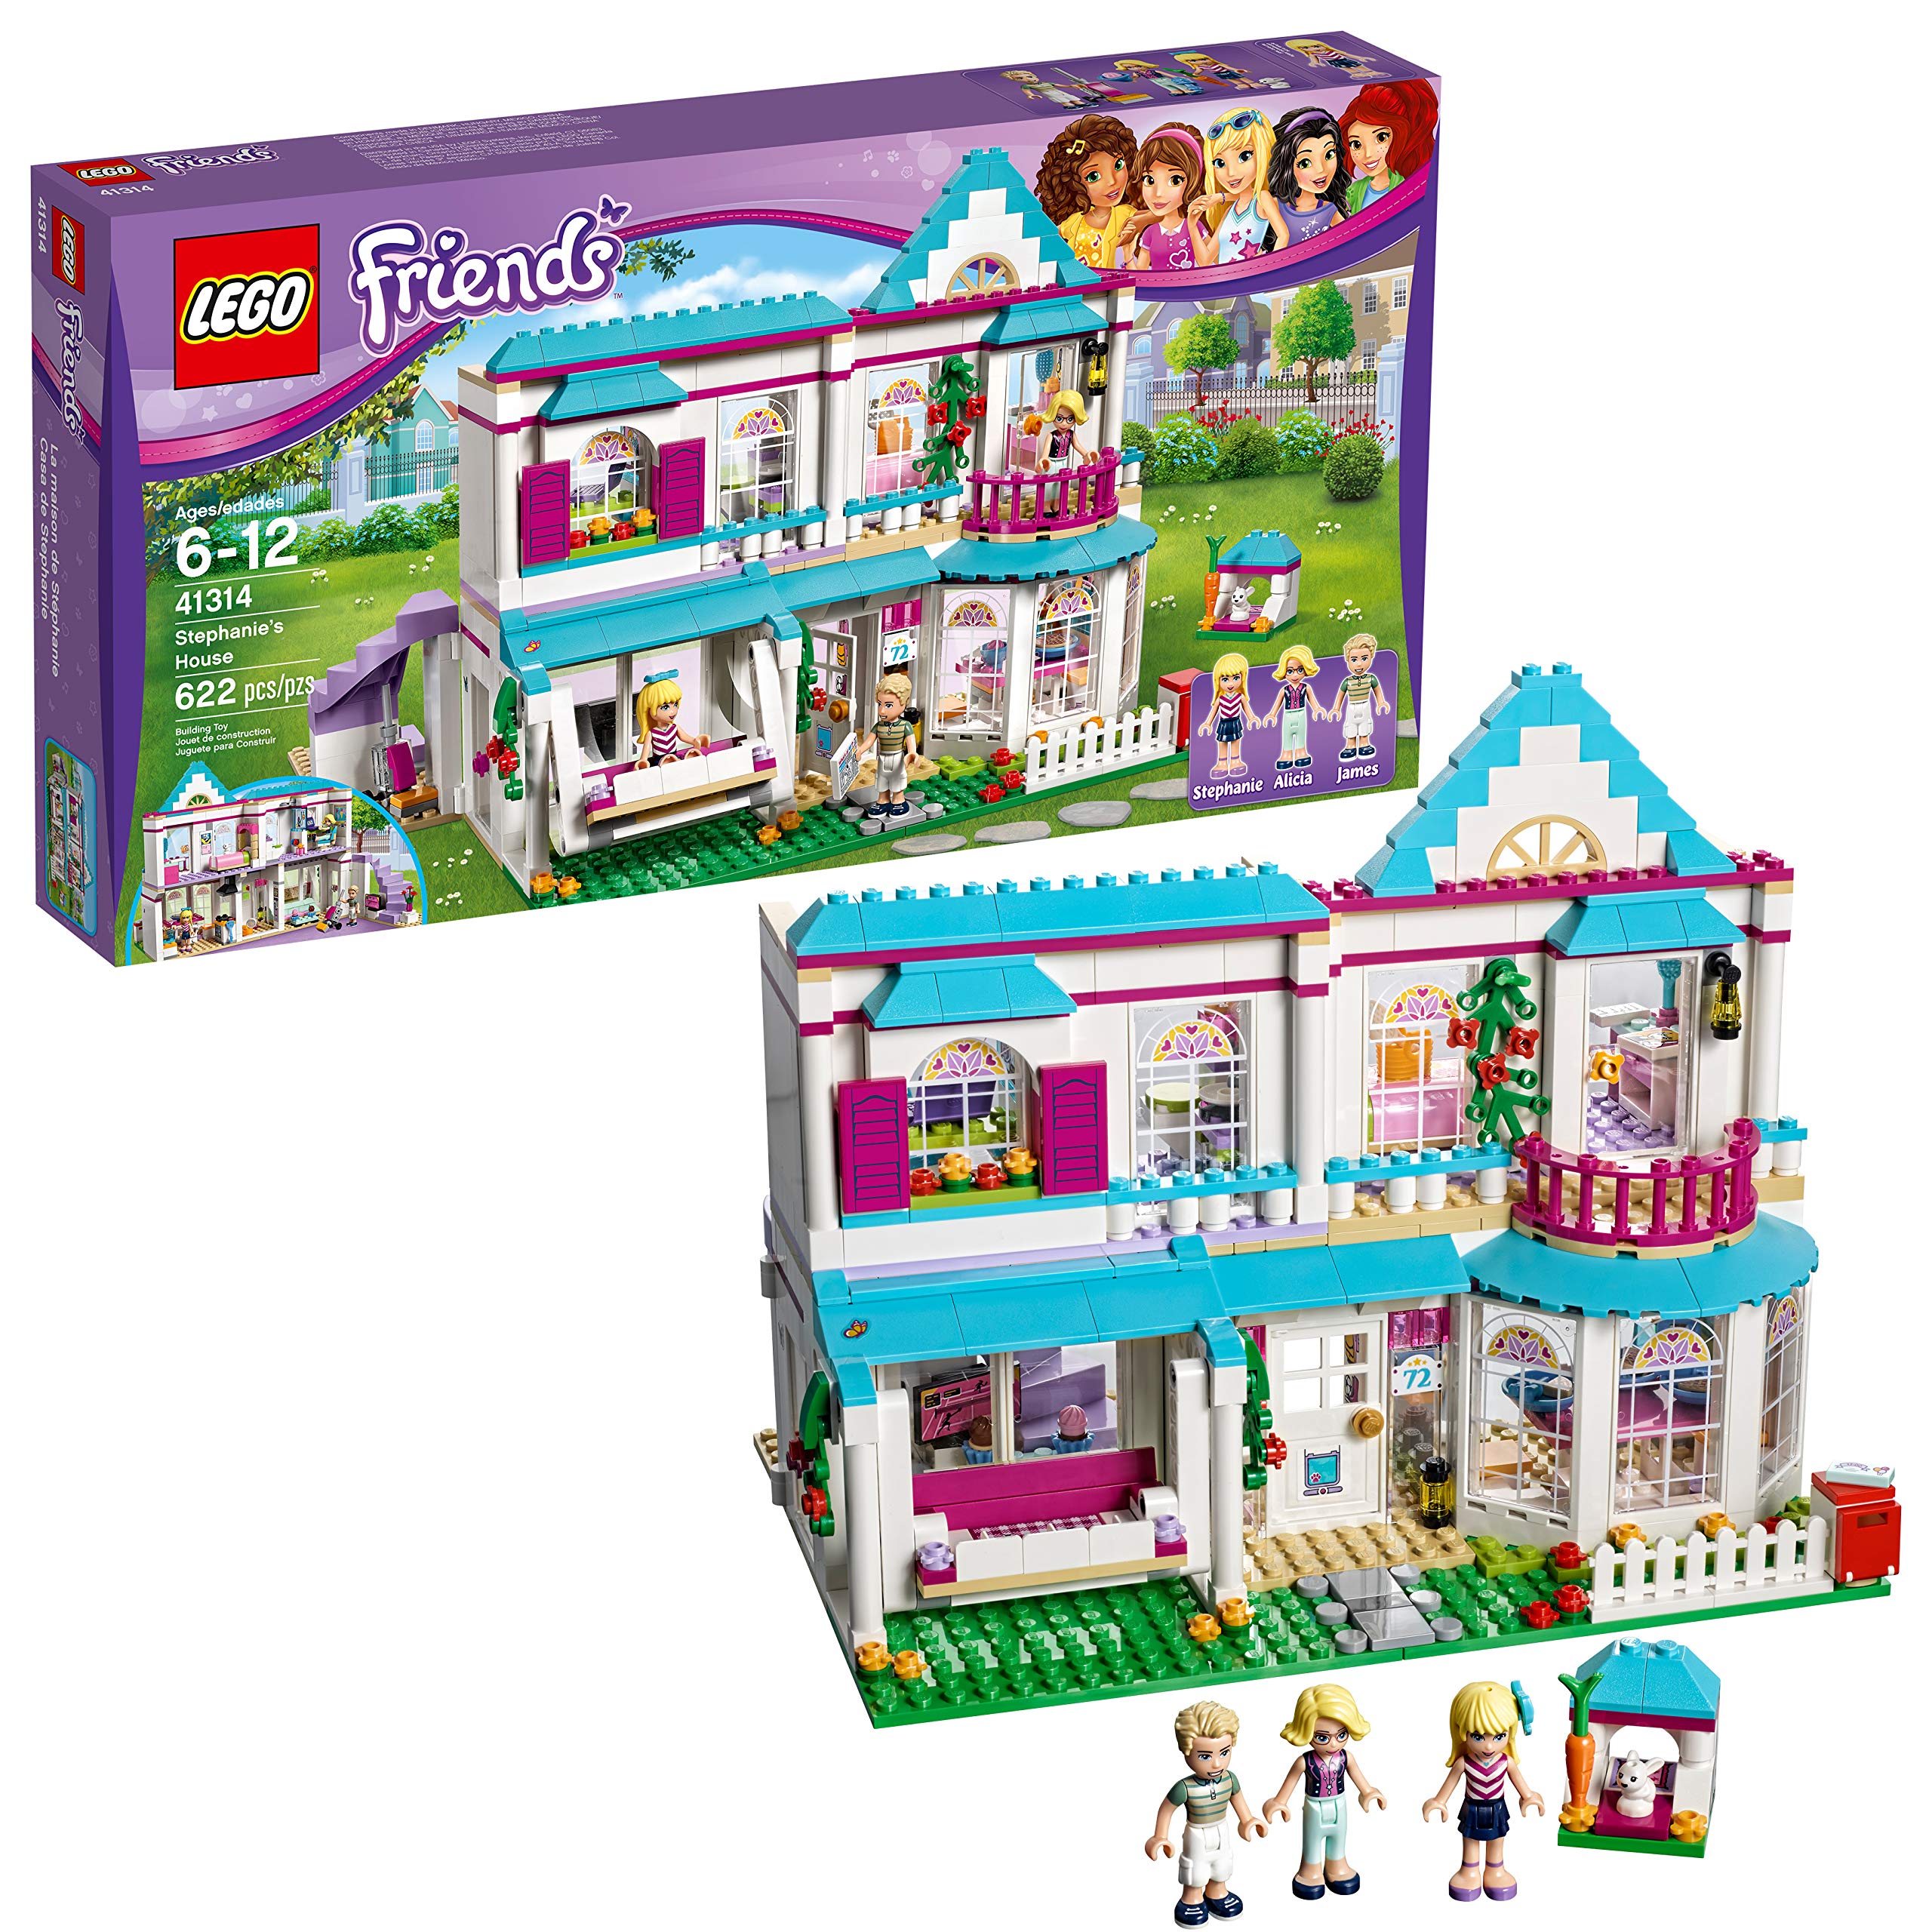 Mua LEGO Friends Stephanie's House 41314 Build and Play Toy House with Mini  Dolls, Dollhouse Kit (622 Pieces) trên Amazon Mỹ chính hãng 2023 |  Giaonhan247